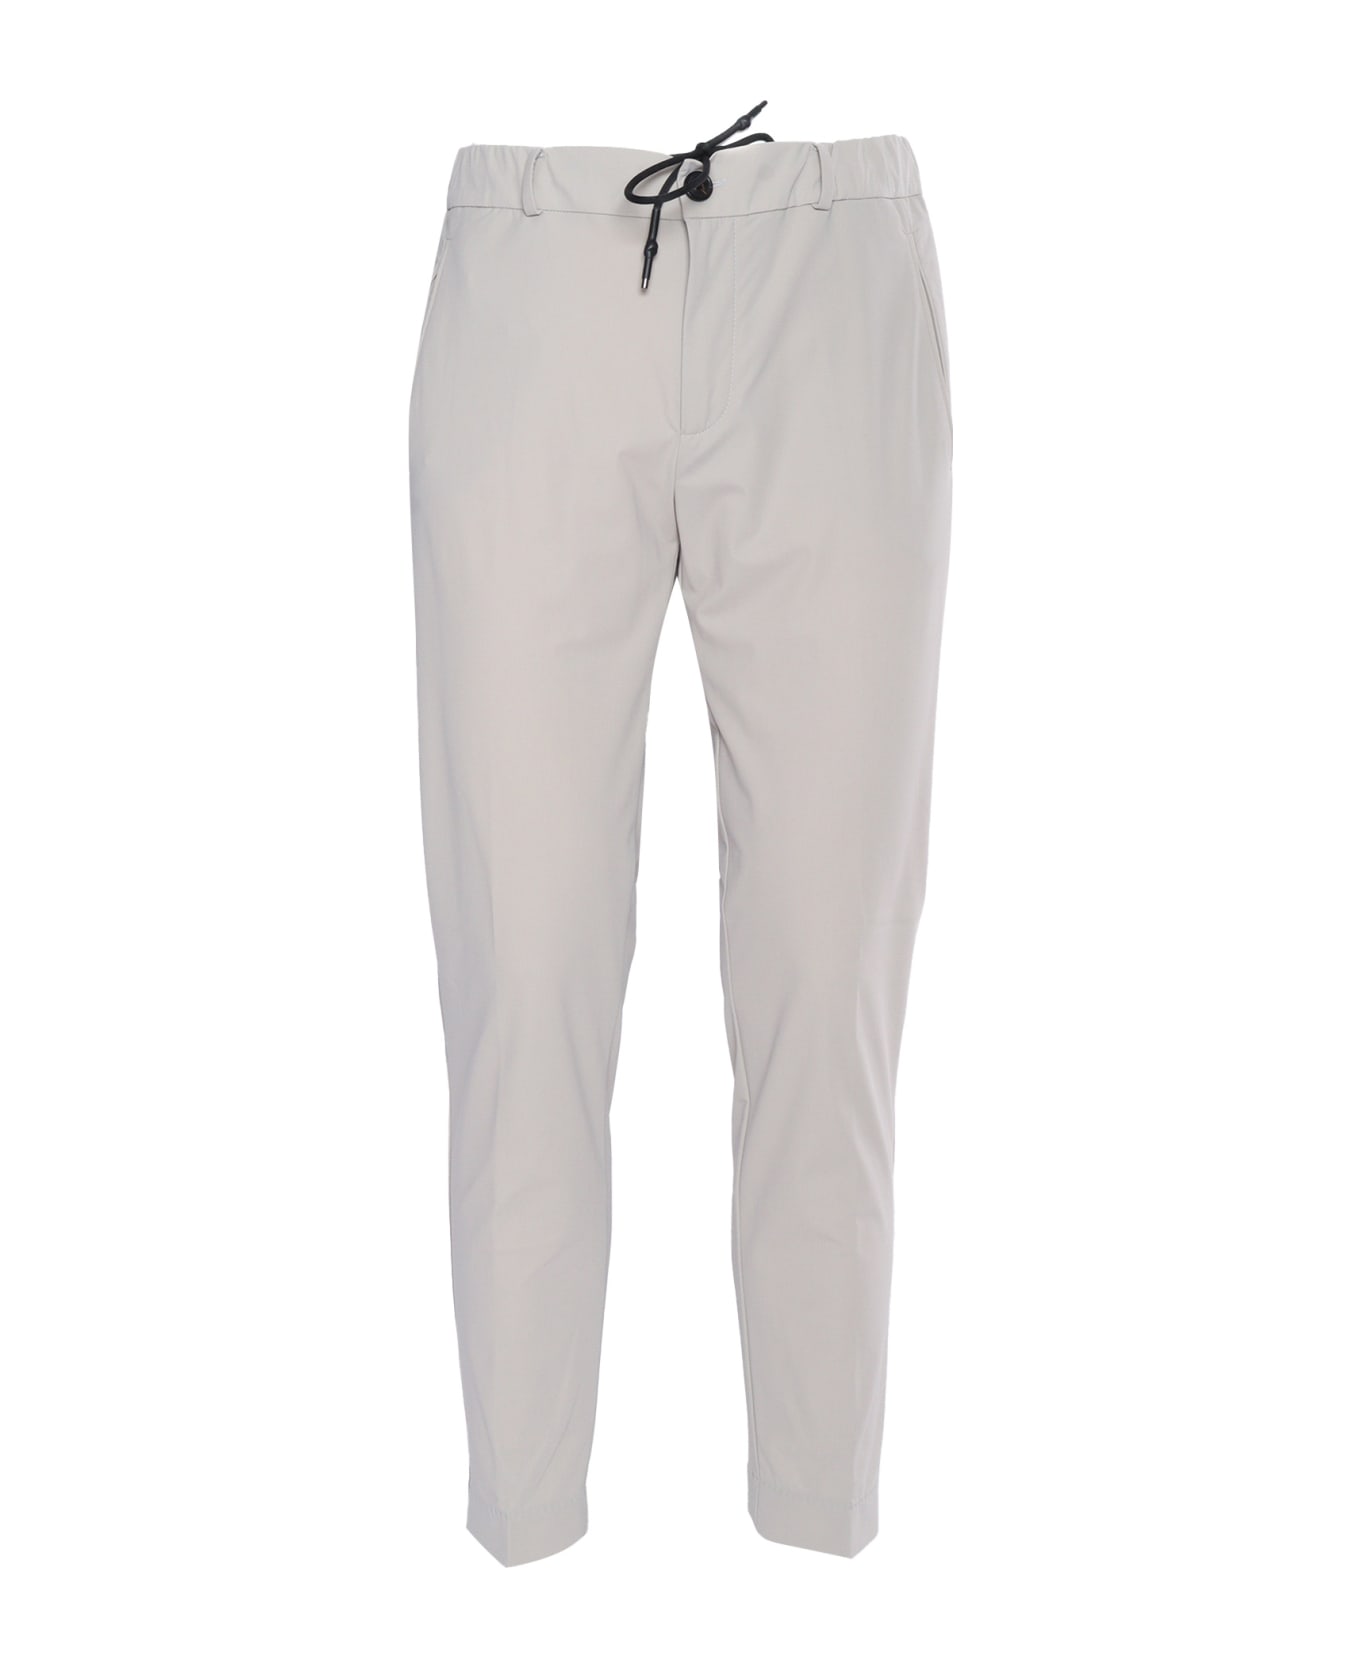 RRD - Roberto Ricci Design Gray Chino Pants - WHITE